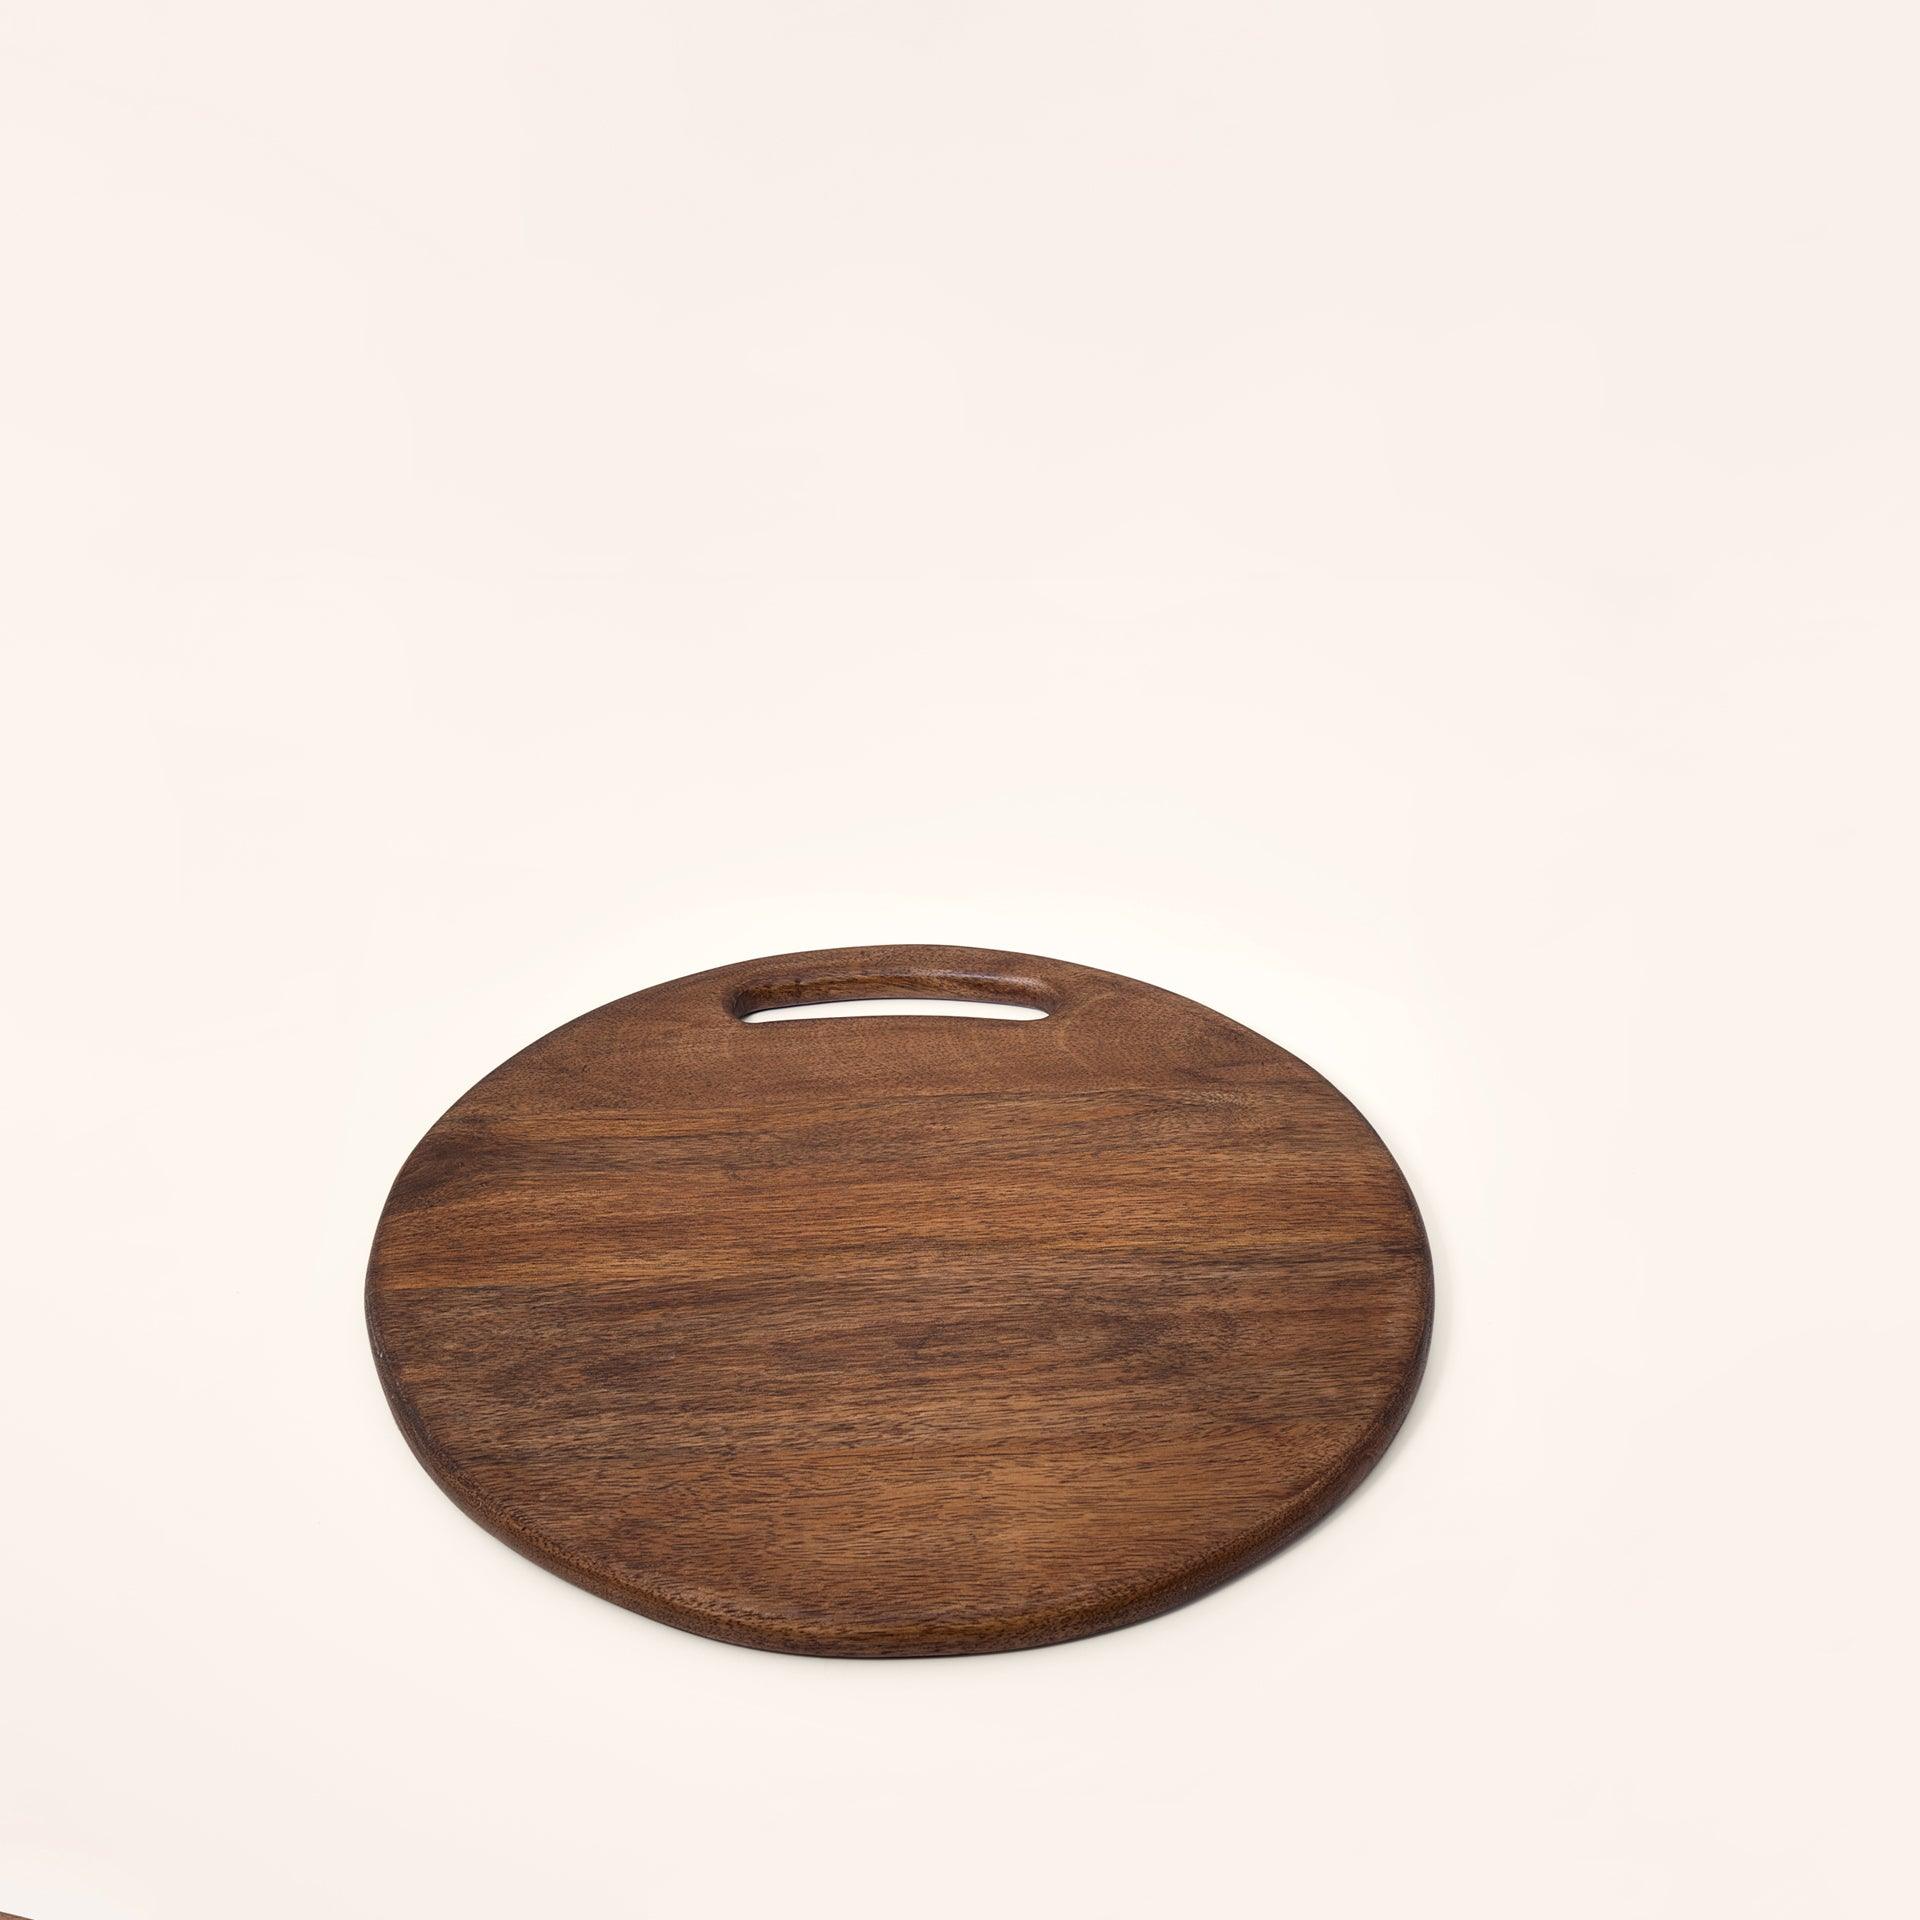 wooden chopping board round lrg brown